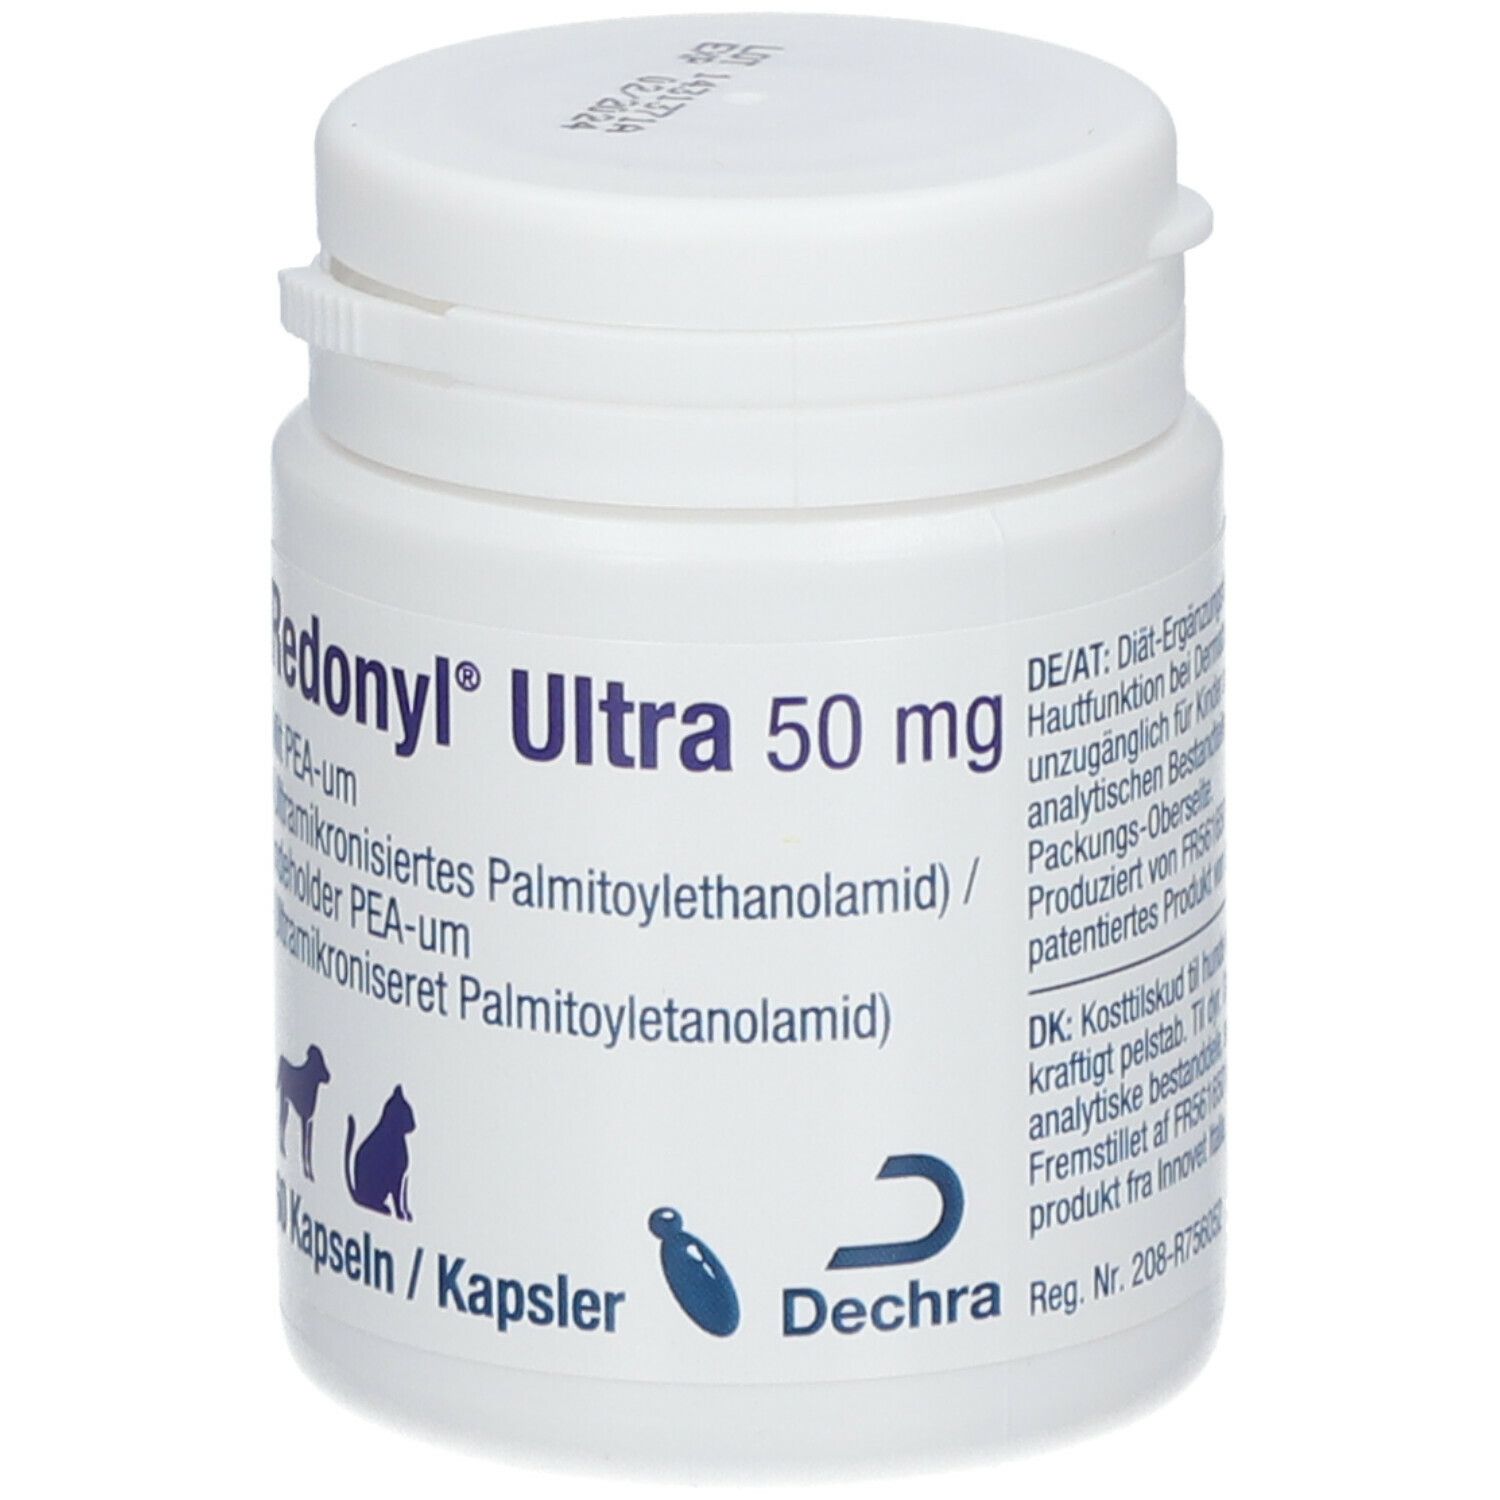 Redonyl® Ultra 50 mg